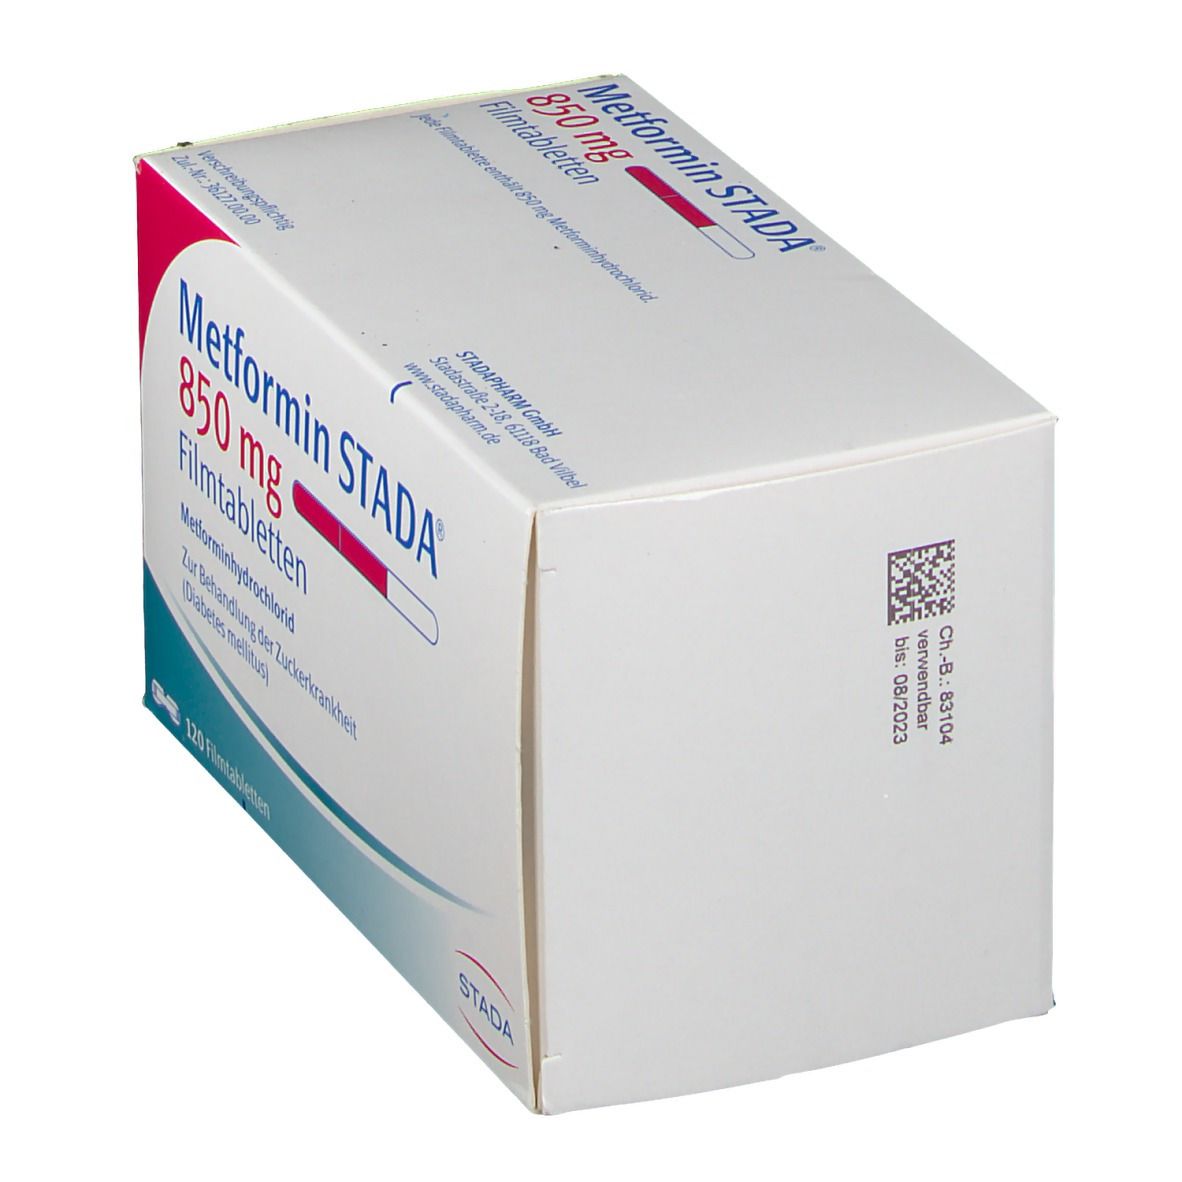 Metformin STADA® 850 mg